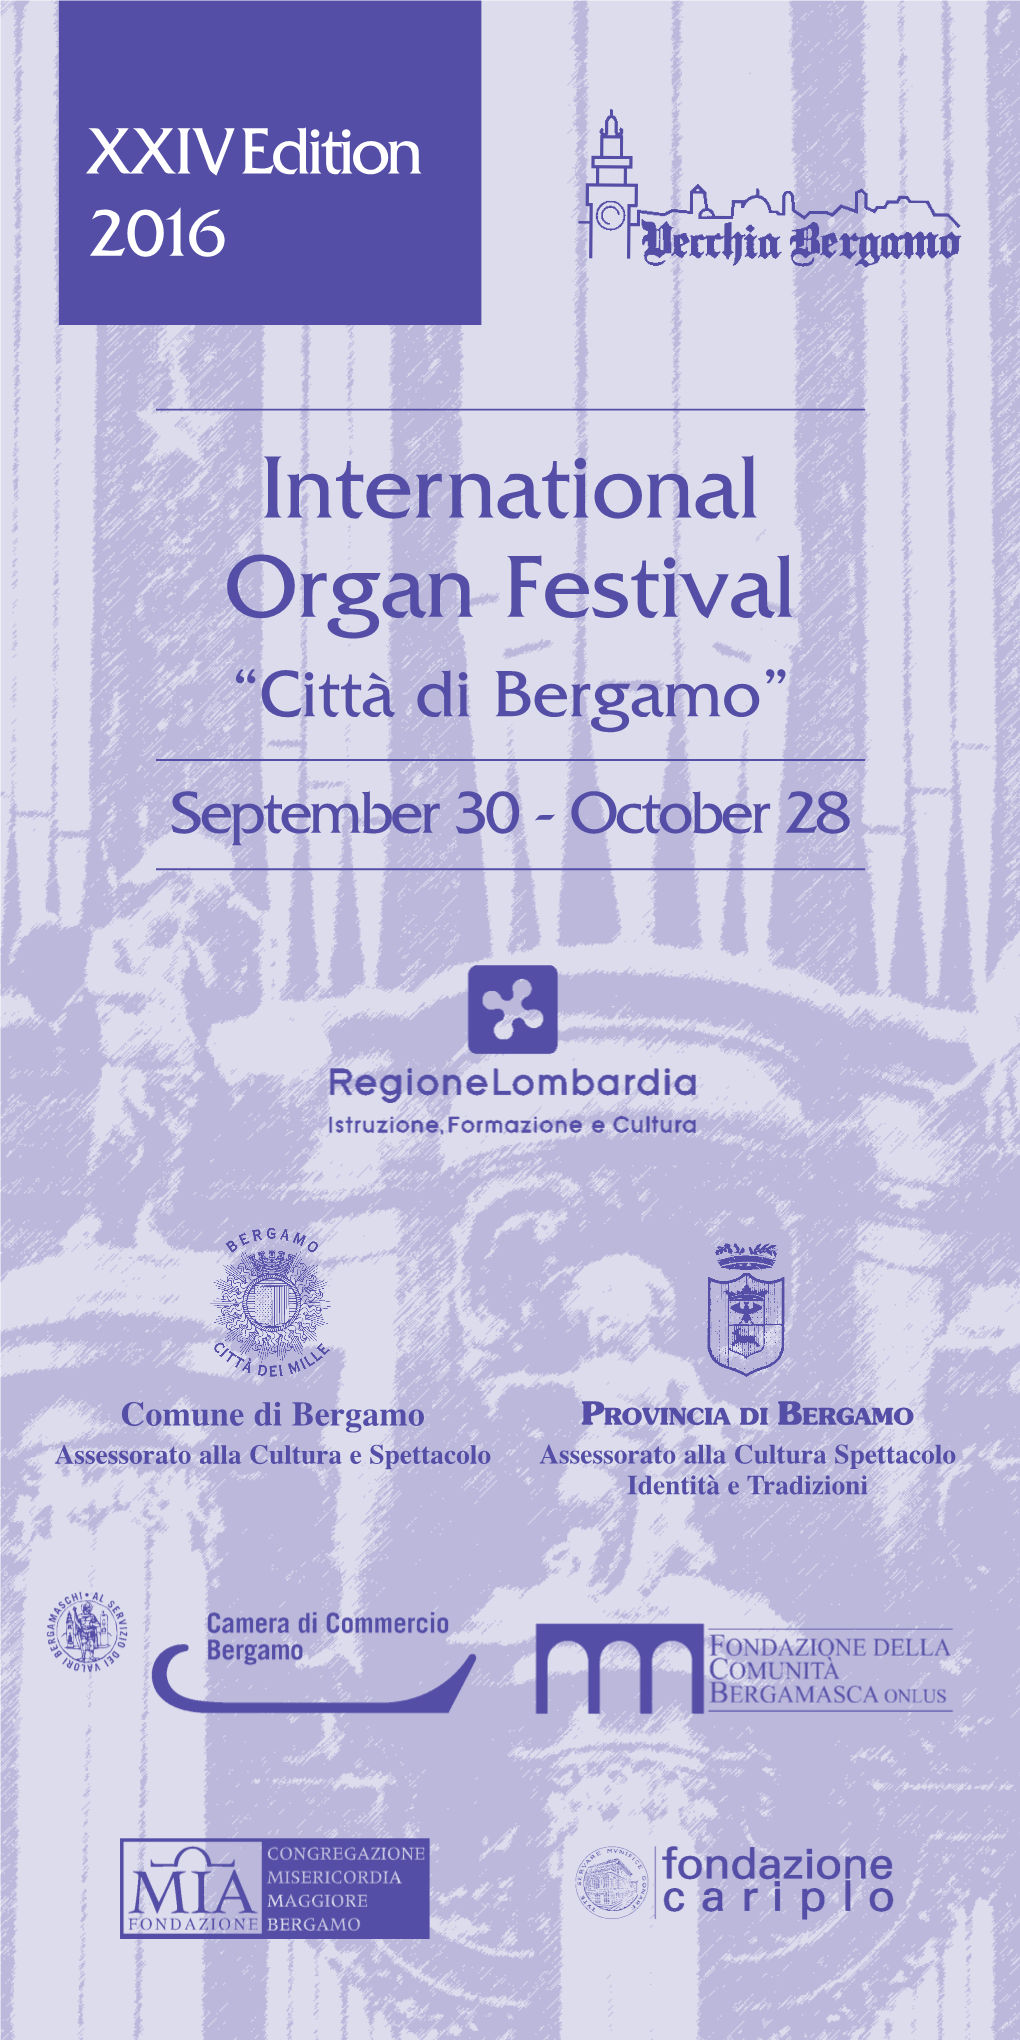 International Organ Festival “Città Di Bergamo” September 30 - October 28